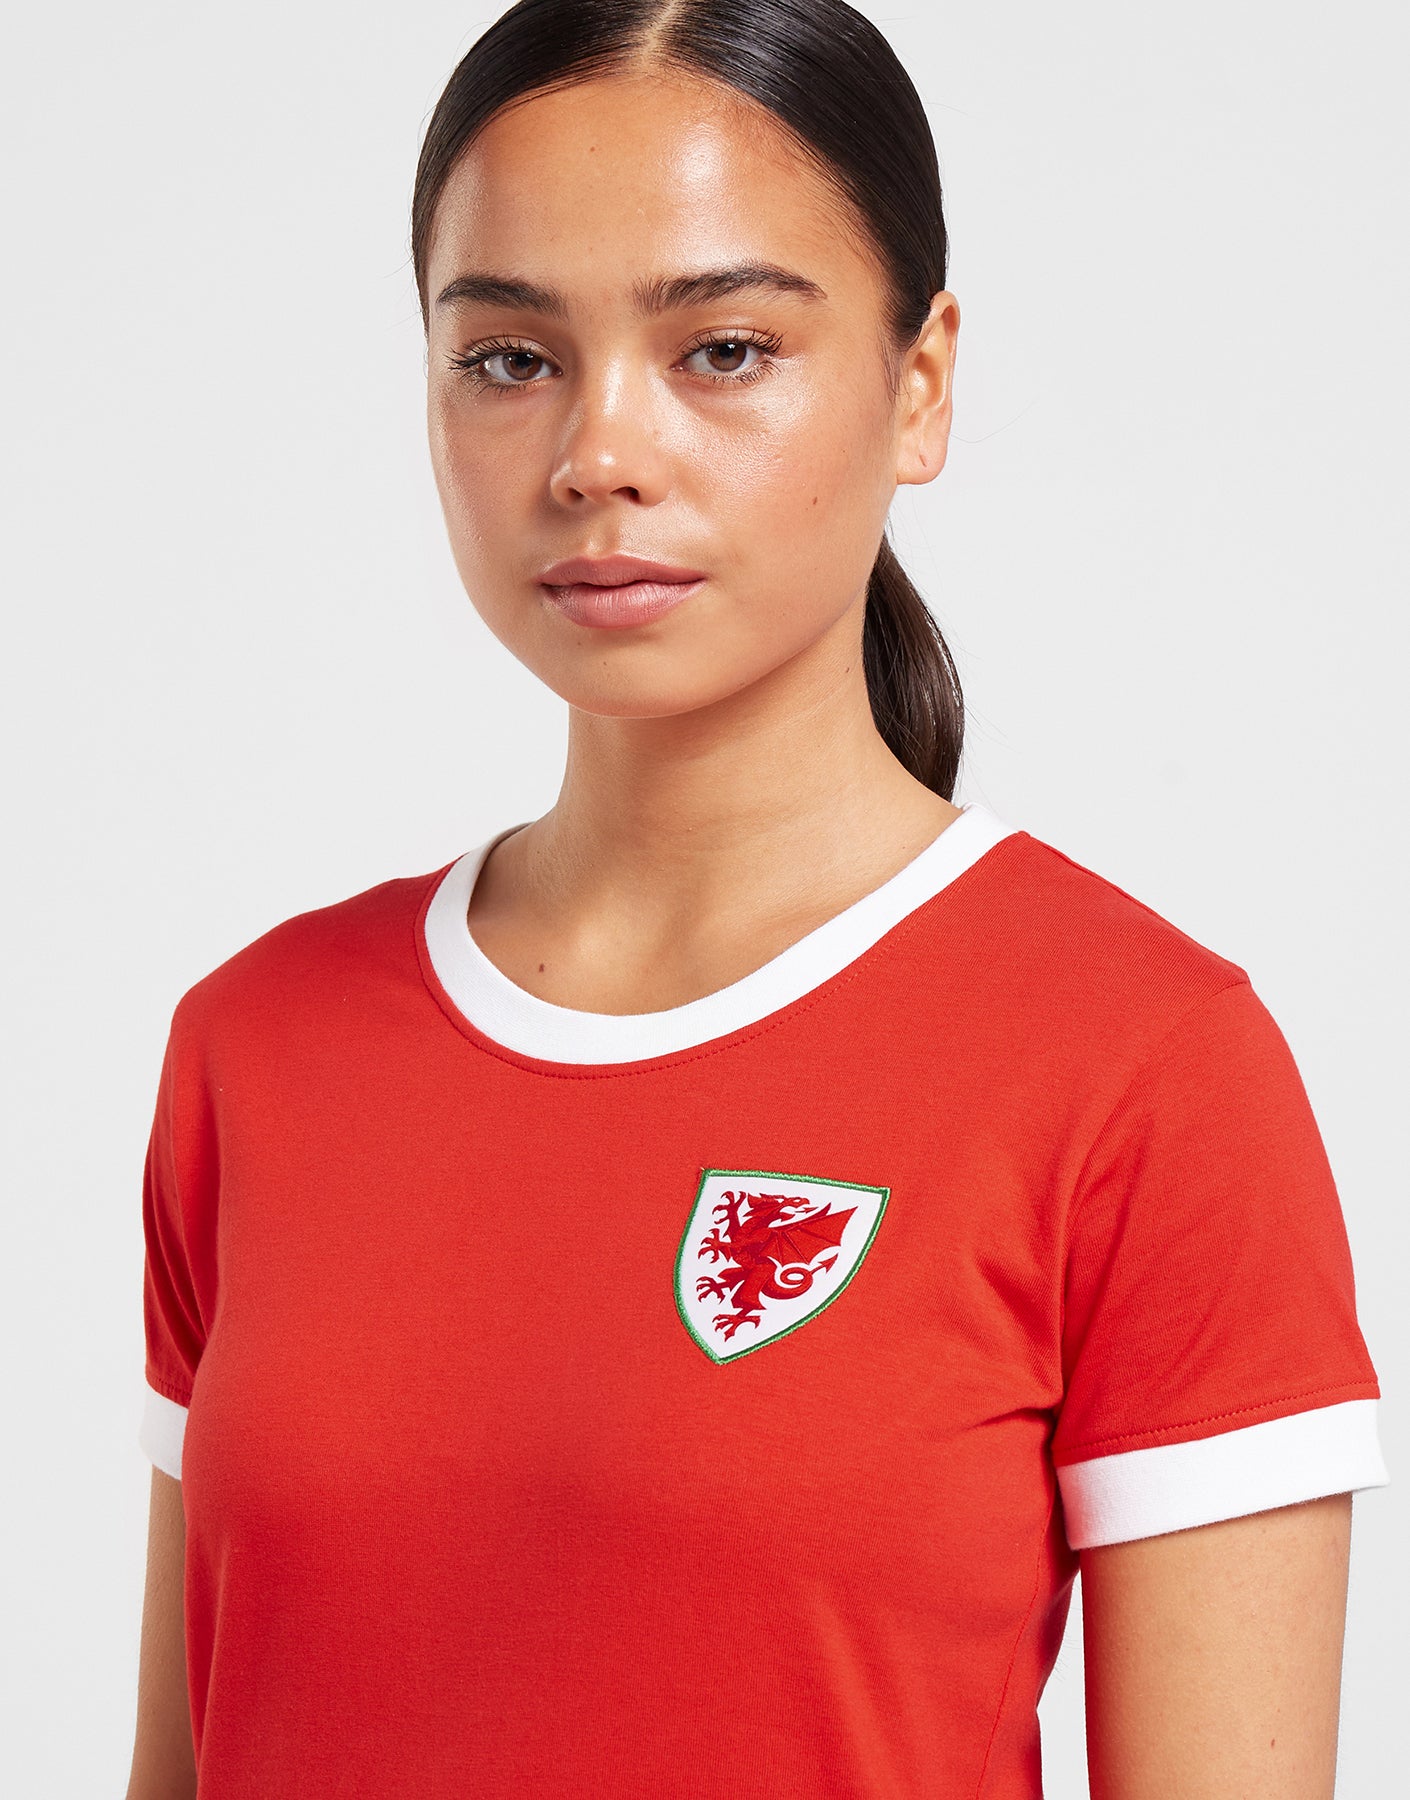 Official Team Wales Women's Ringer T-Shirt